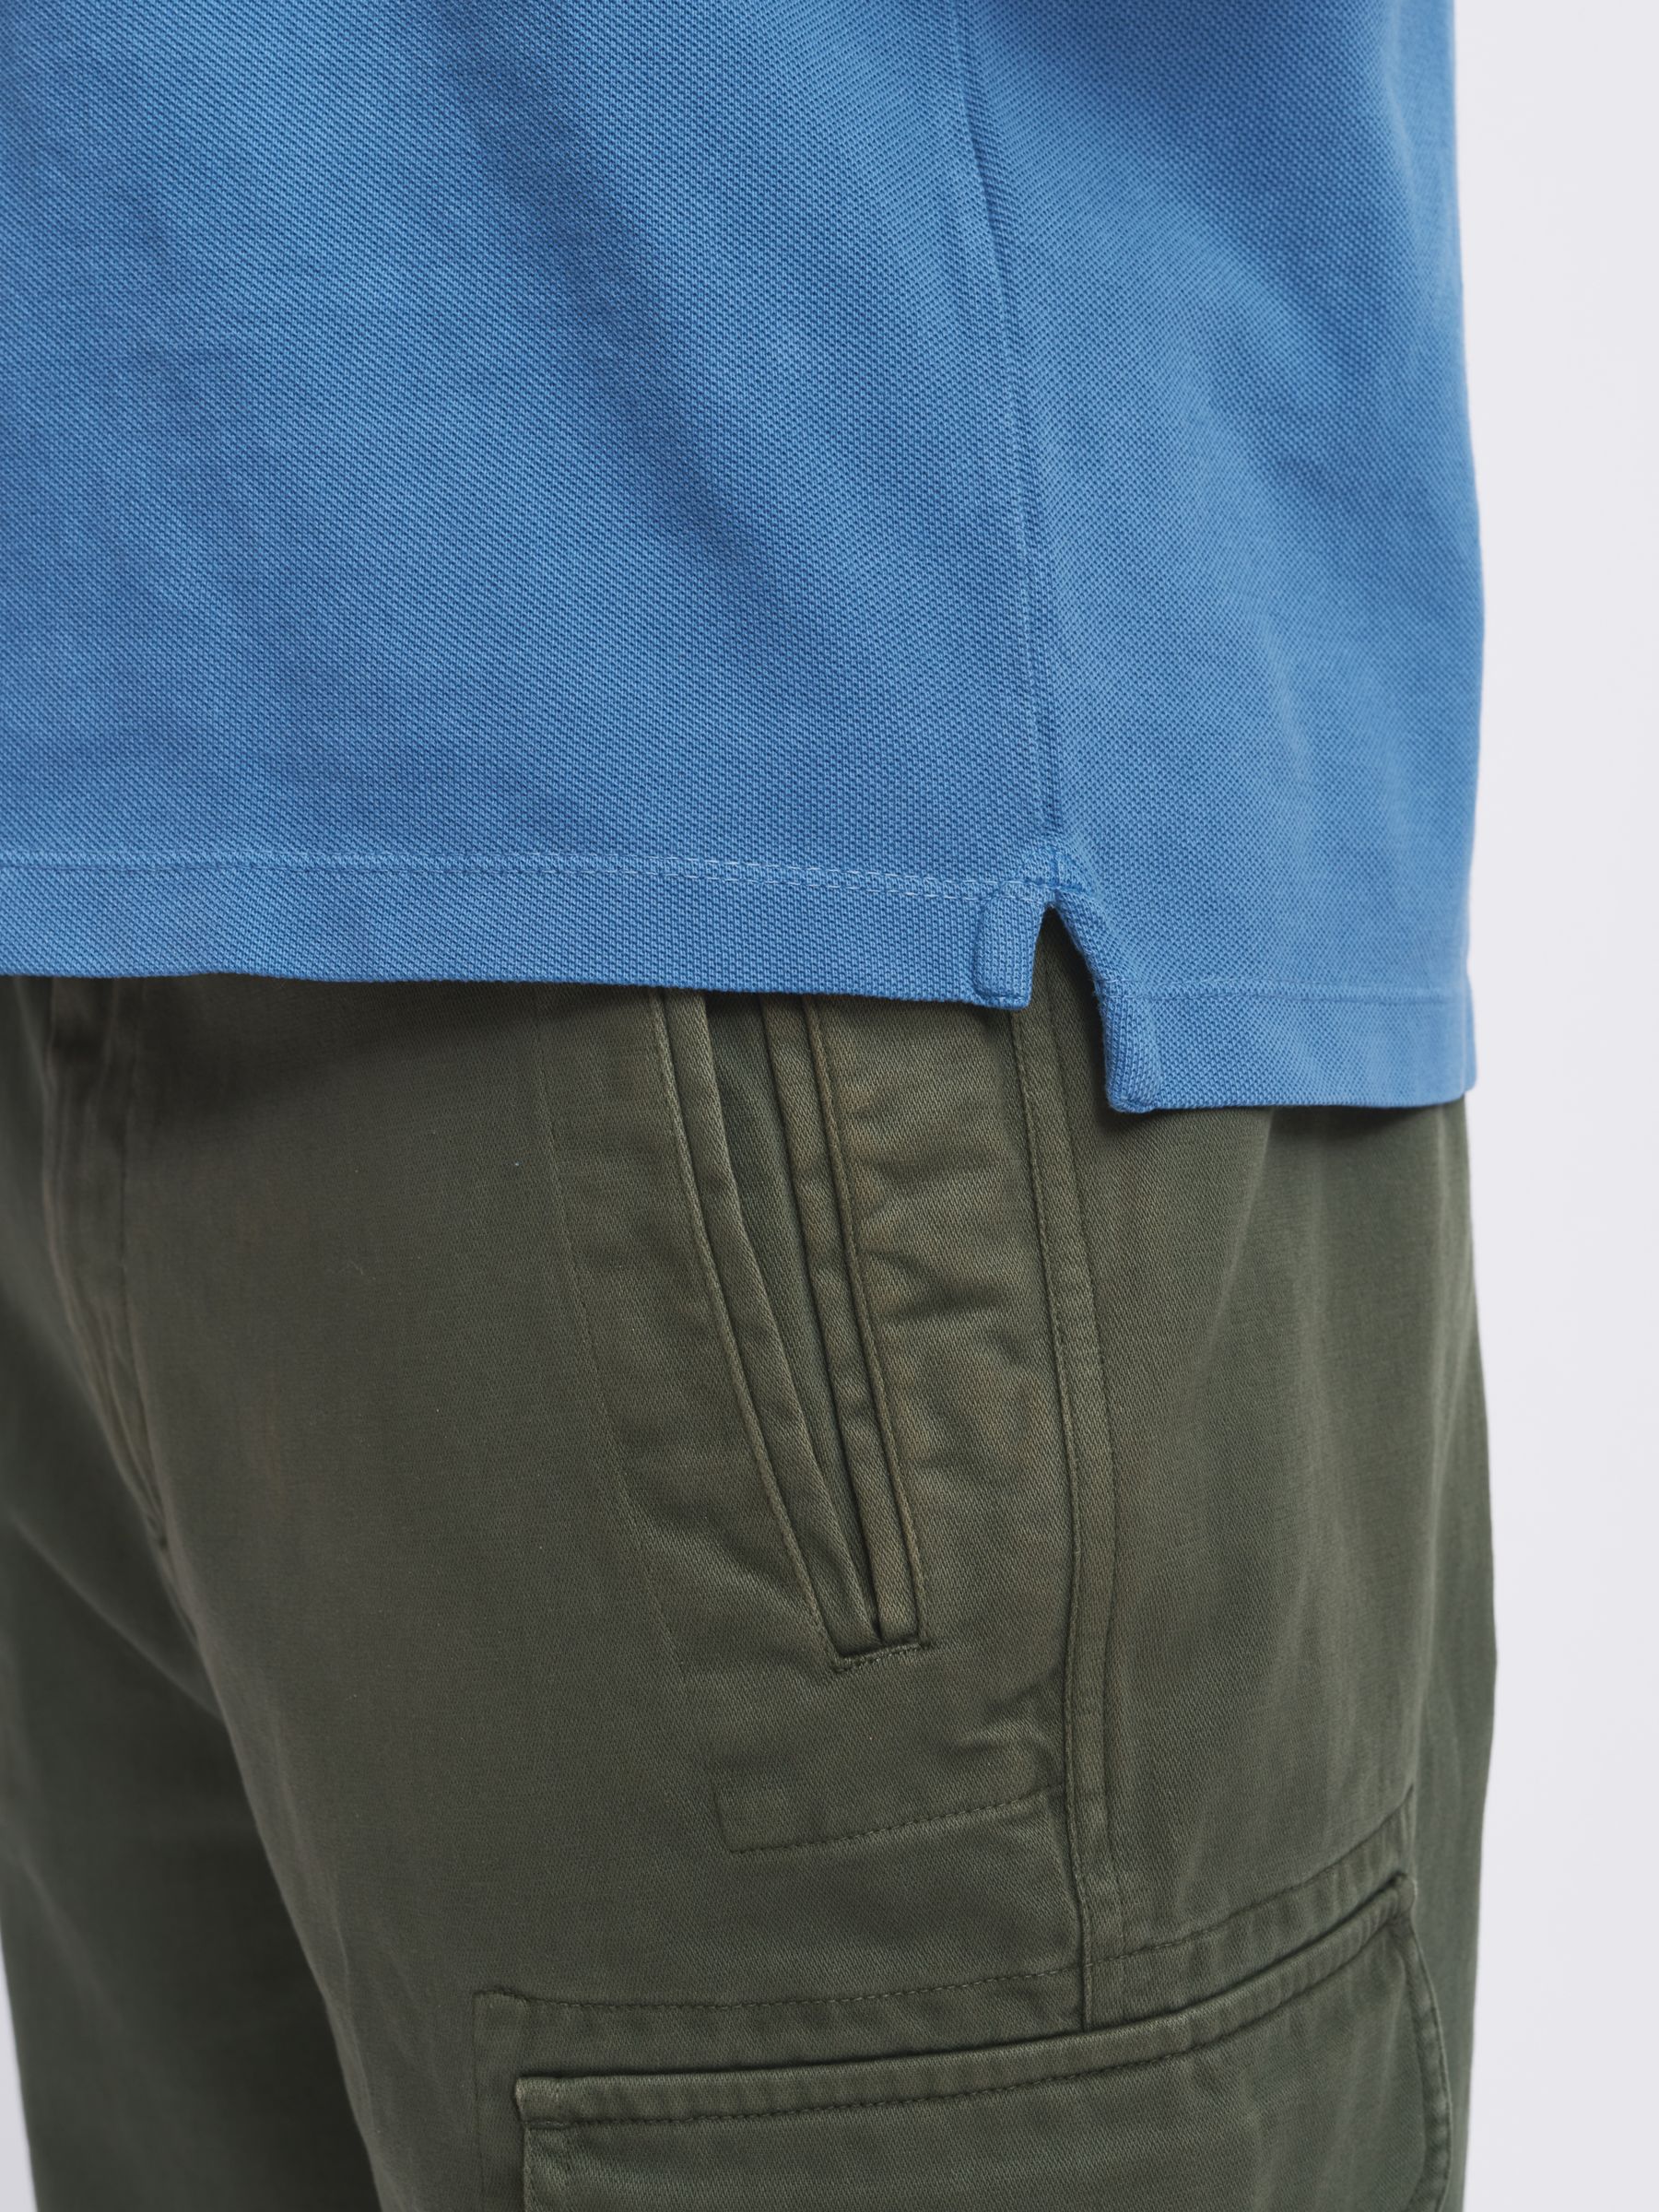 Aubin Hanby Pique Short Sleeve Polo Shirt, Pale Blue, XXL